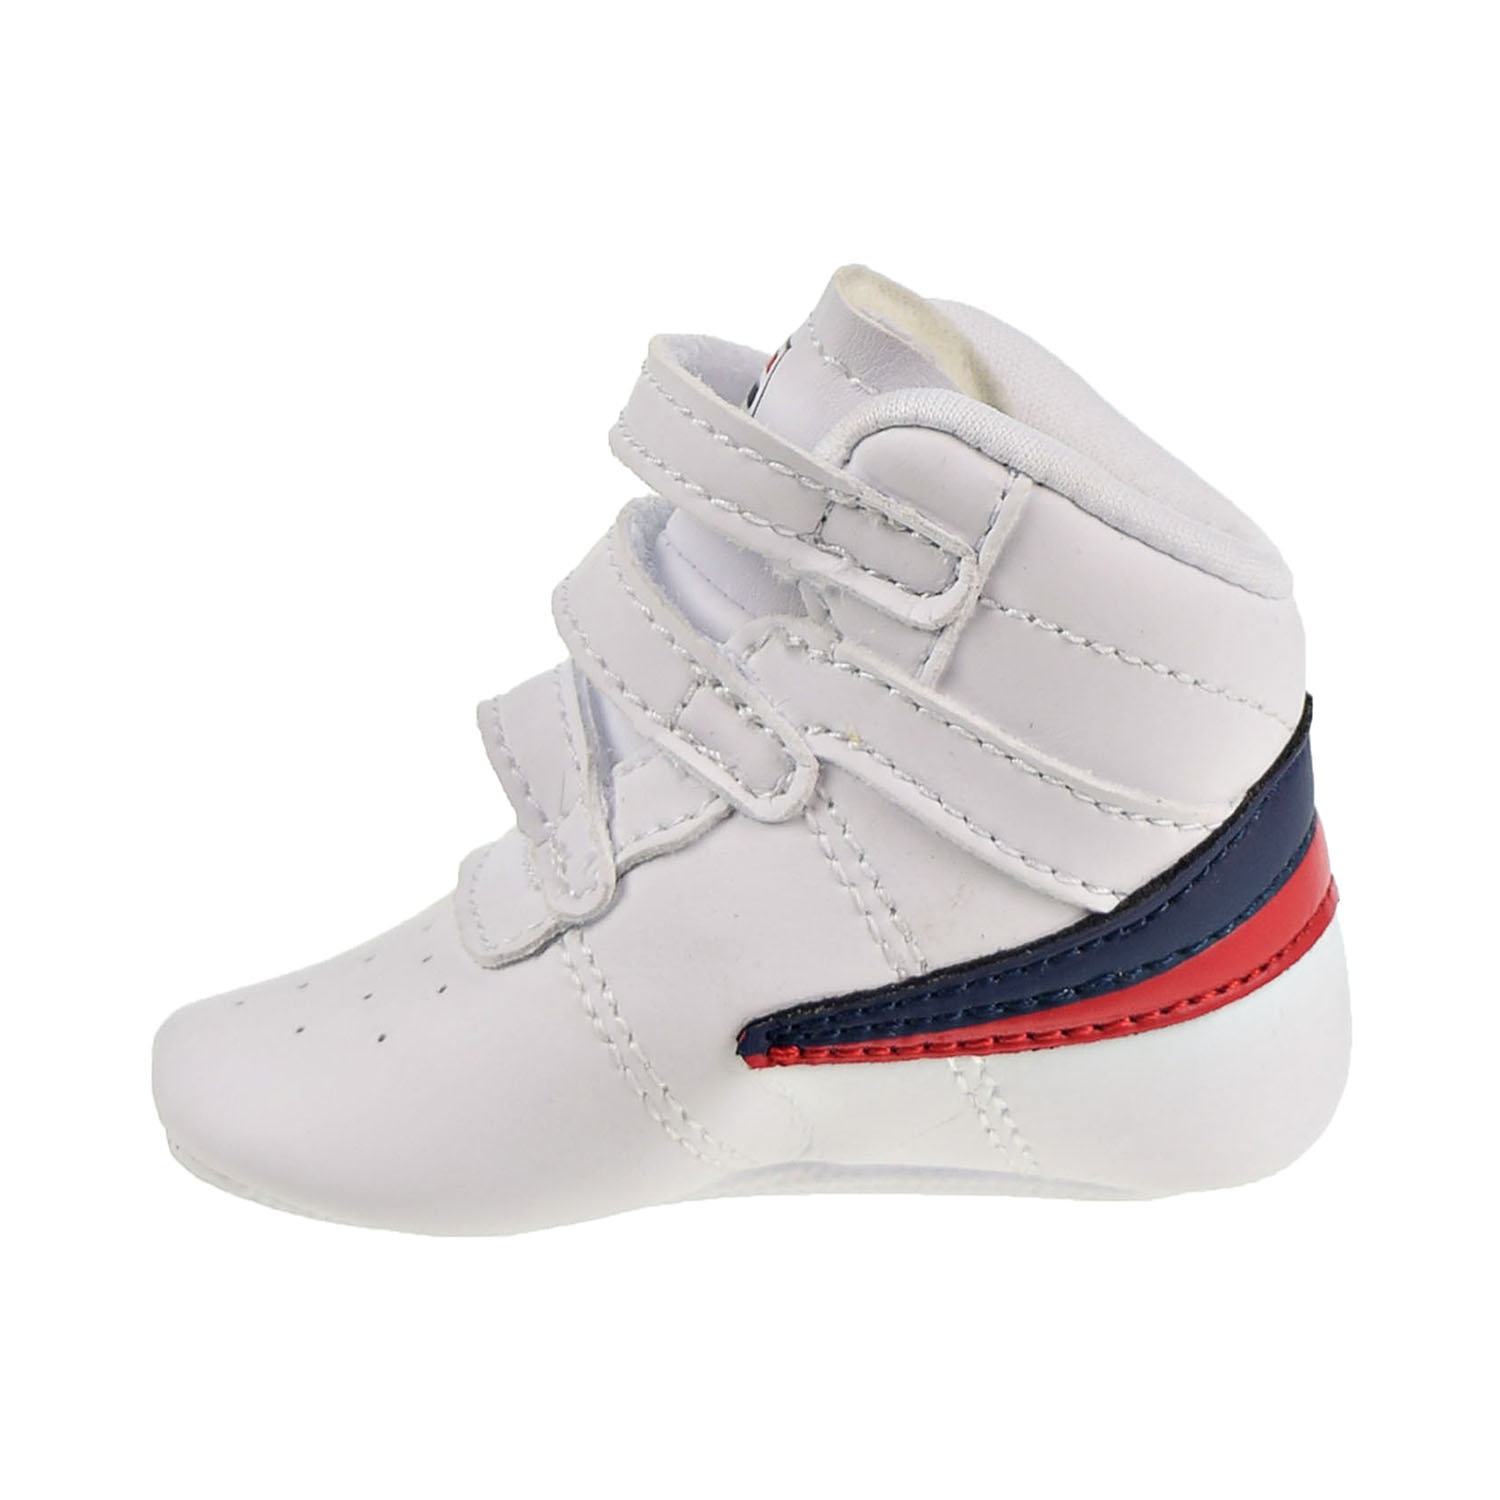 Fila Crib F-13 Kids' Shoes White/Navy/Red 7fm00613-125 - image 4 of 6